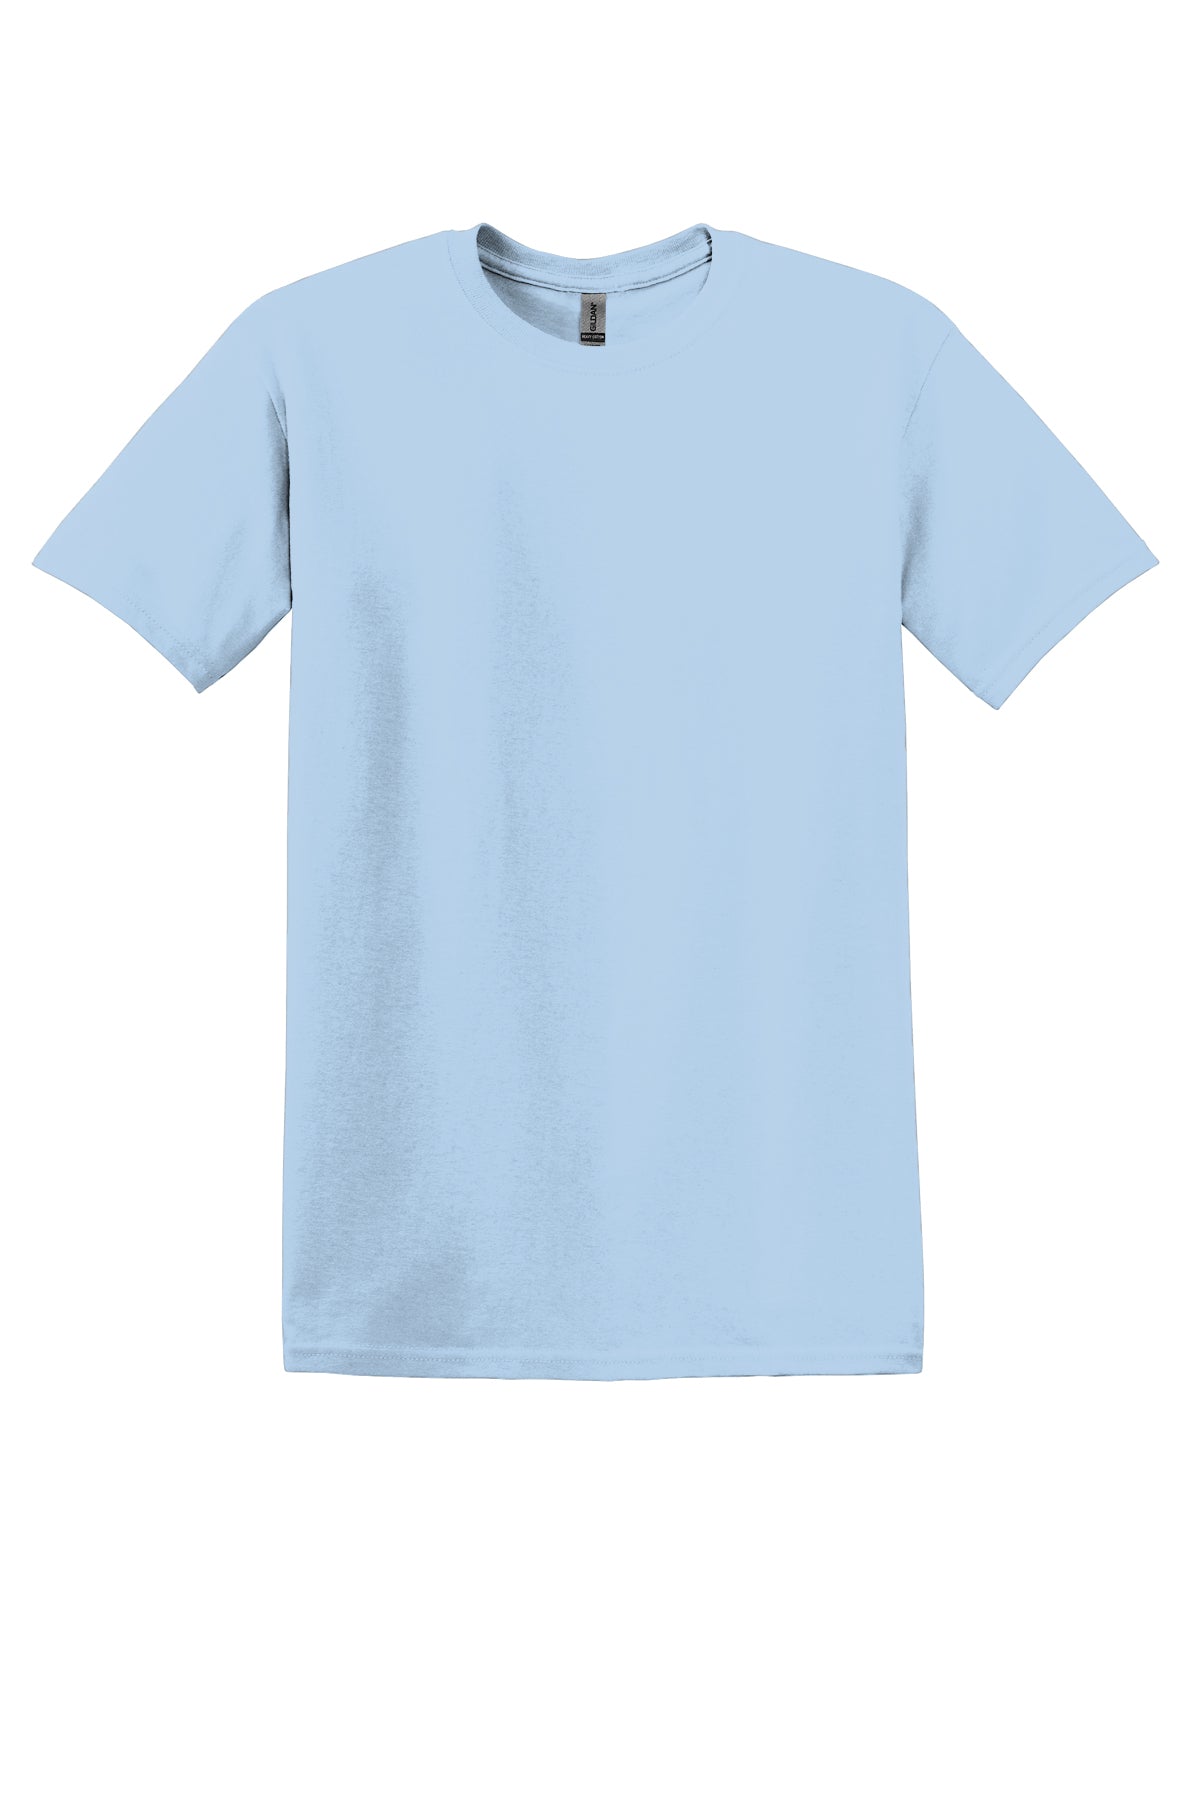 Gildan Mens/Unisex S/S Shirts Light Blue